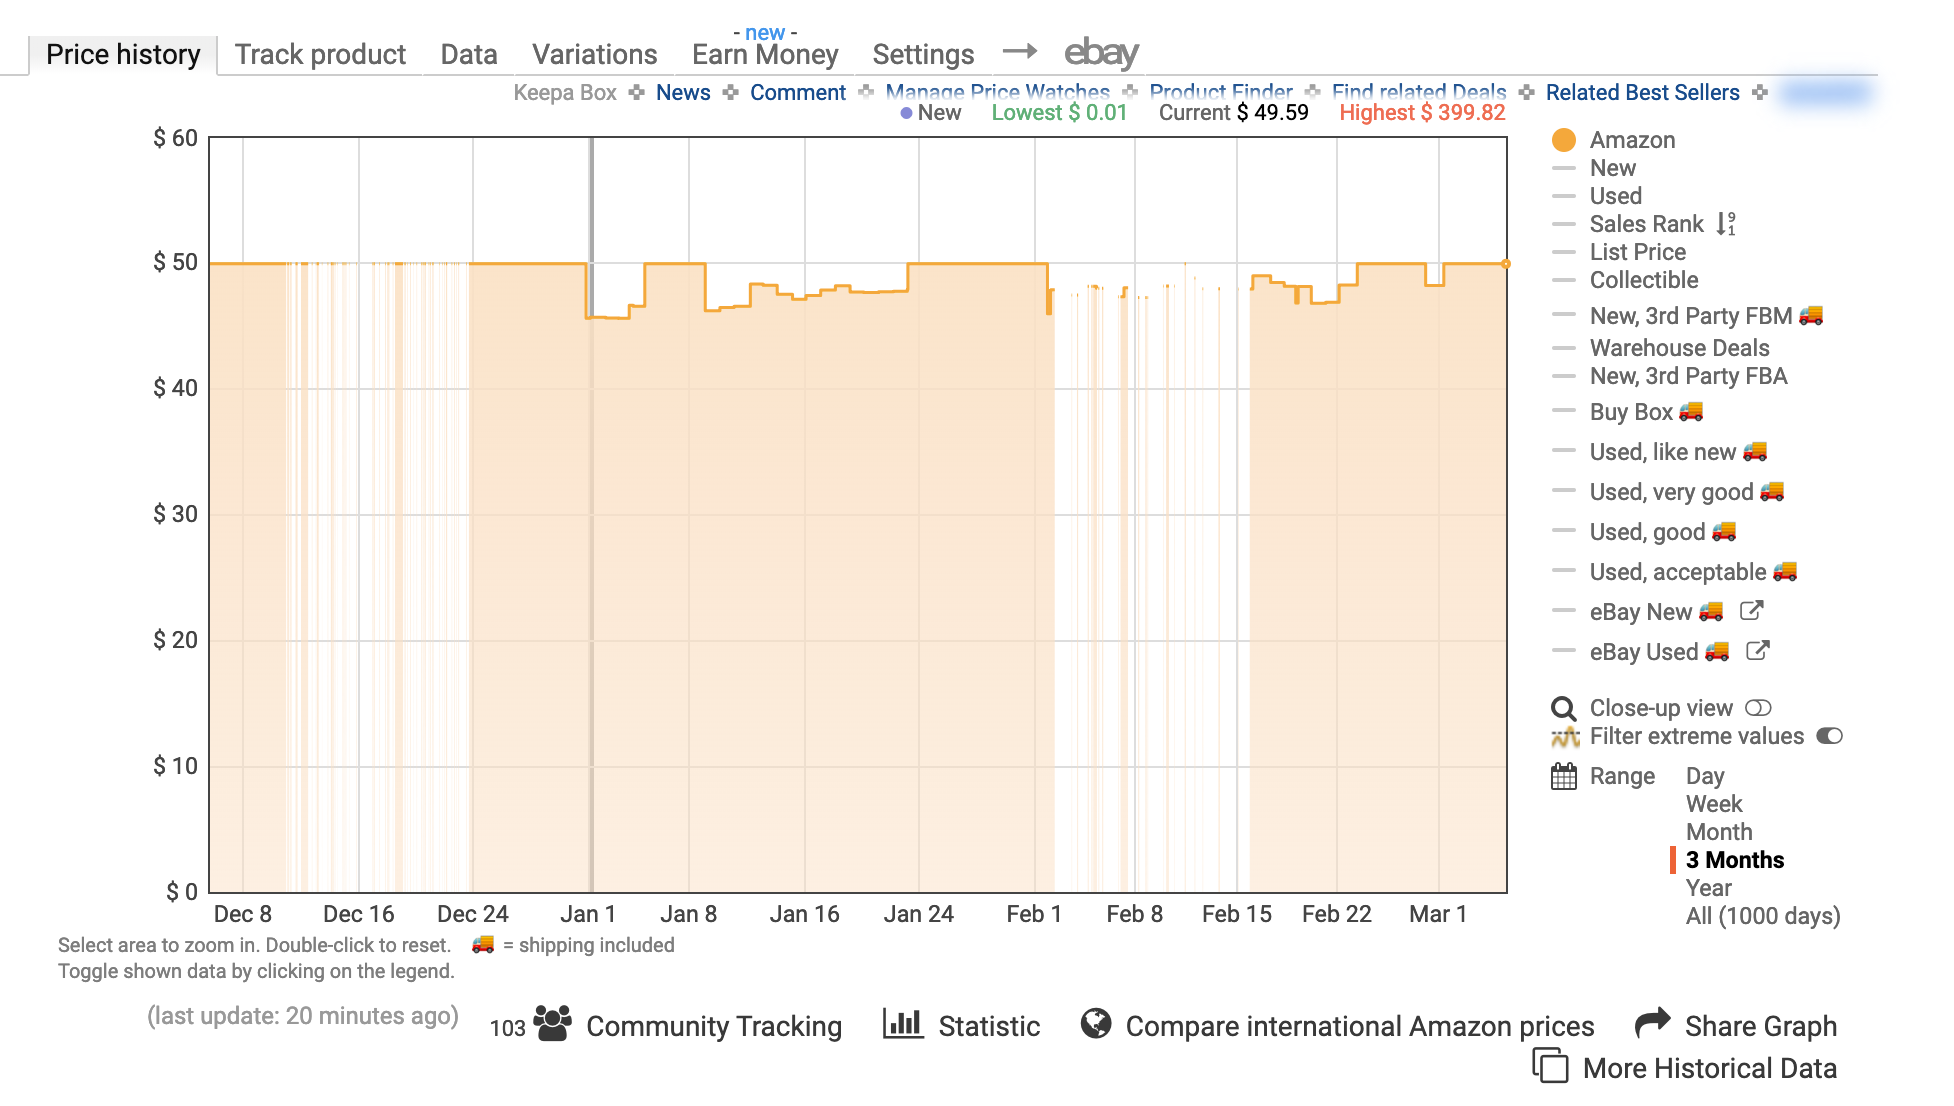 Amazon Sales Rank Chart 2018